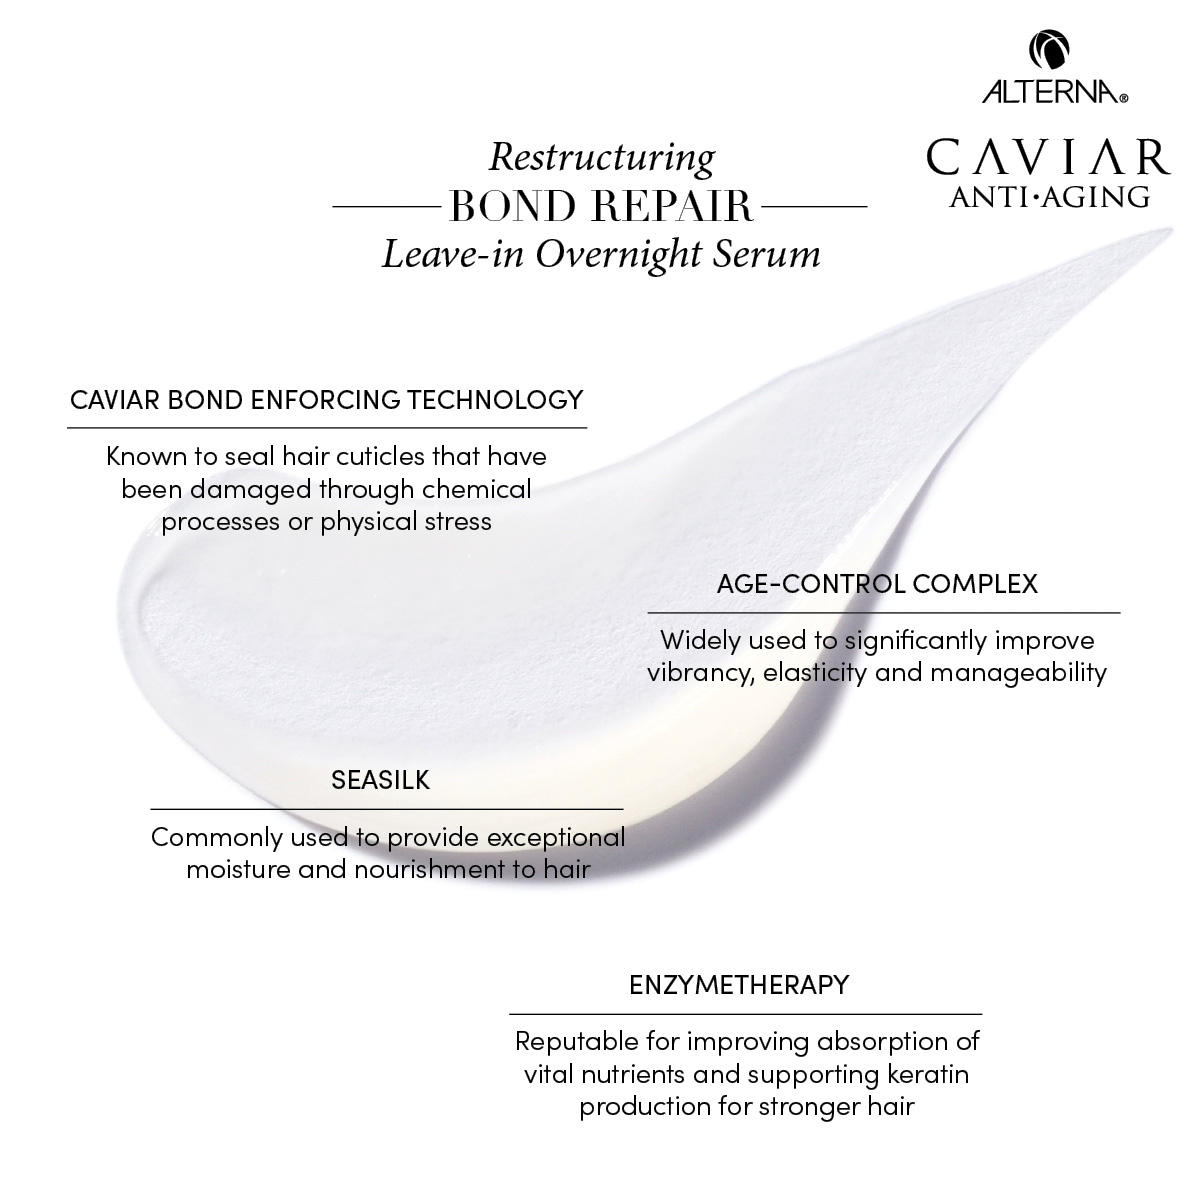 Alterna Caviar Anti-Aging Restructuring Bond Repair Leave-in Overnight Serum 100 ml - 3